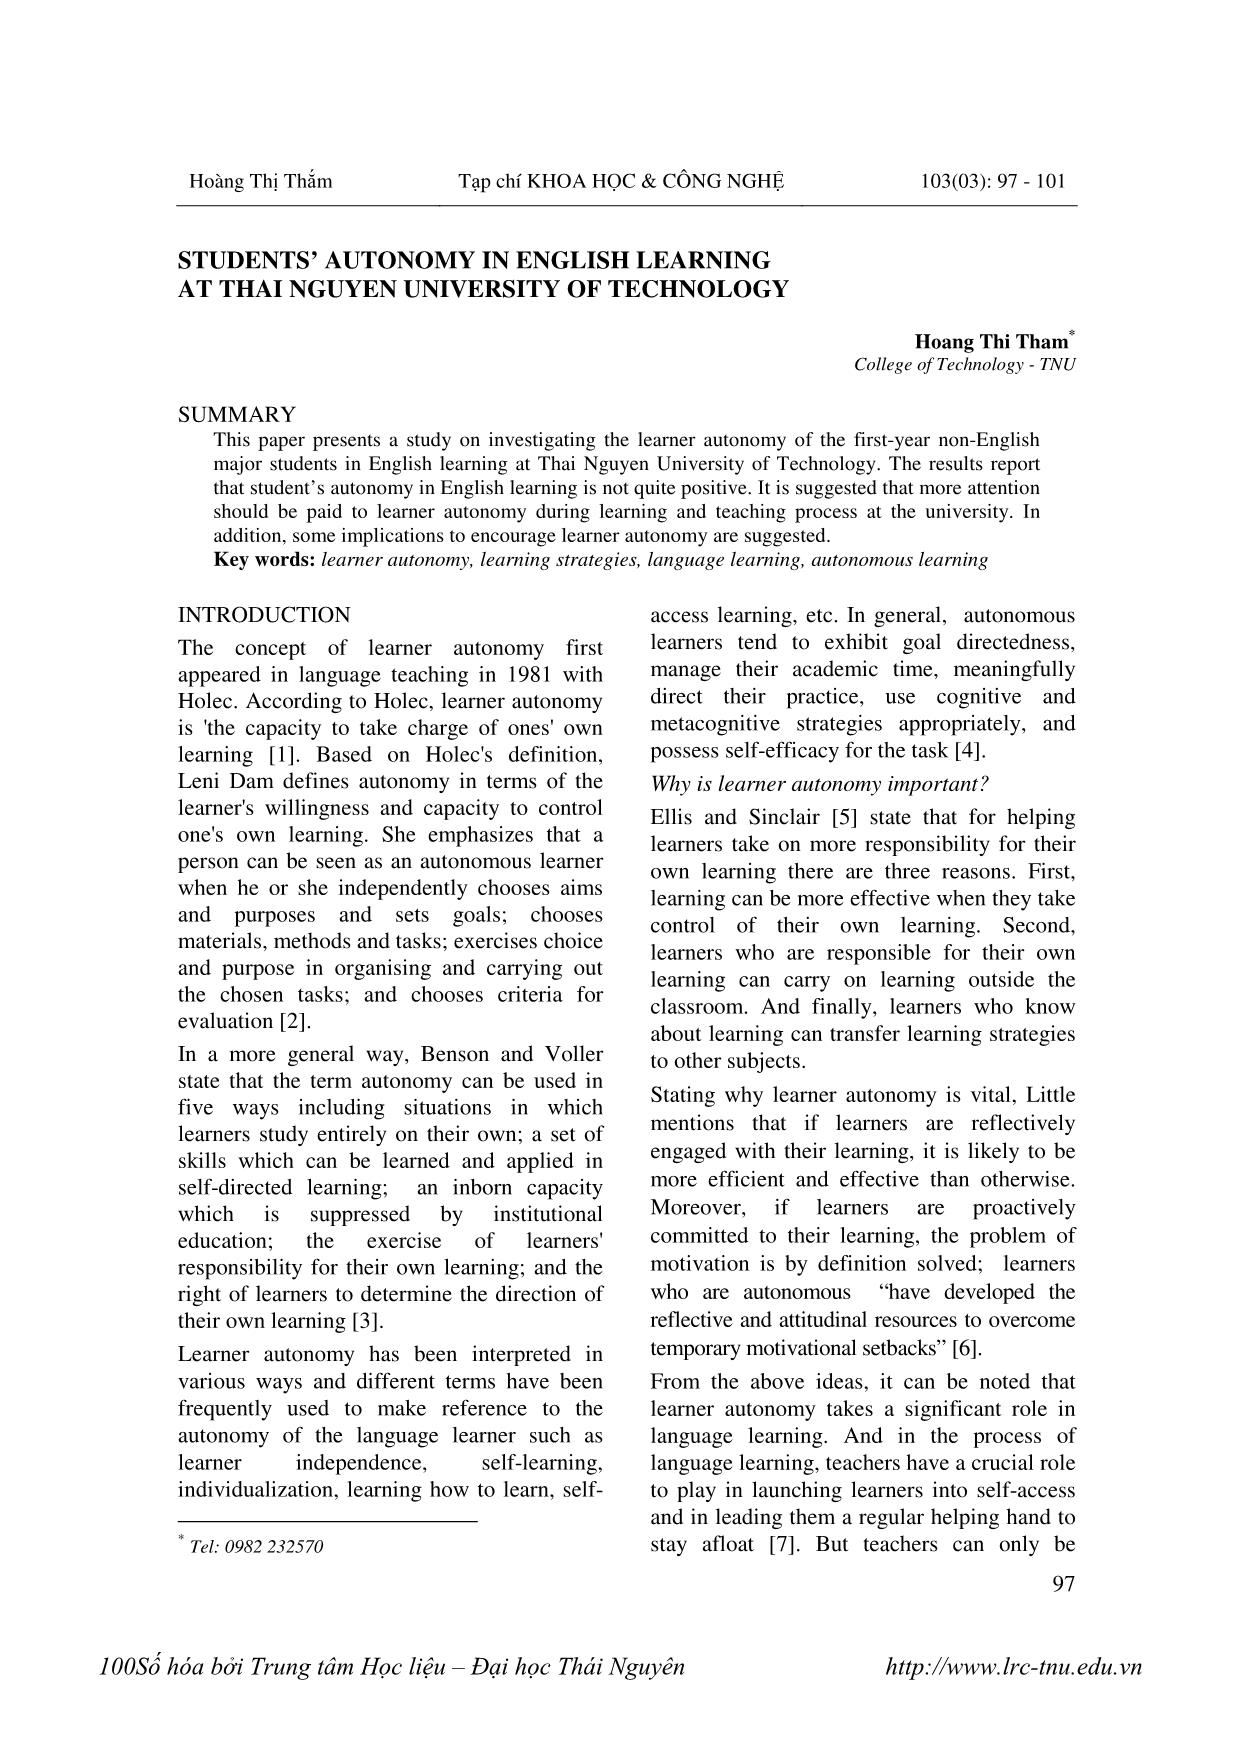 Students’ autonomy in english learning at Thai Nguyen university of technology trang 1